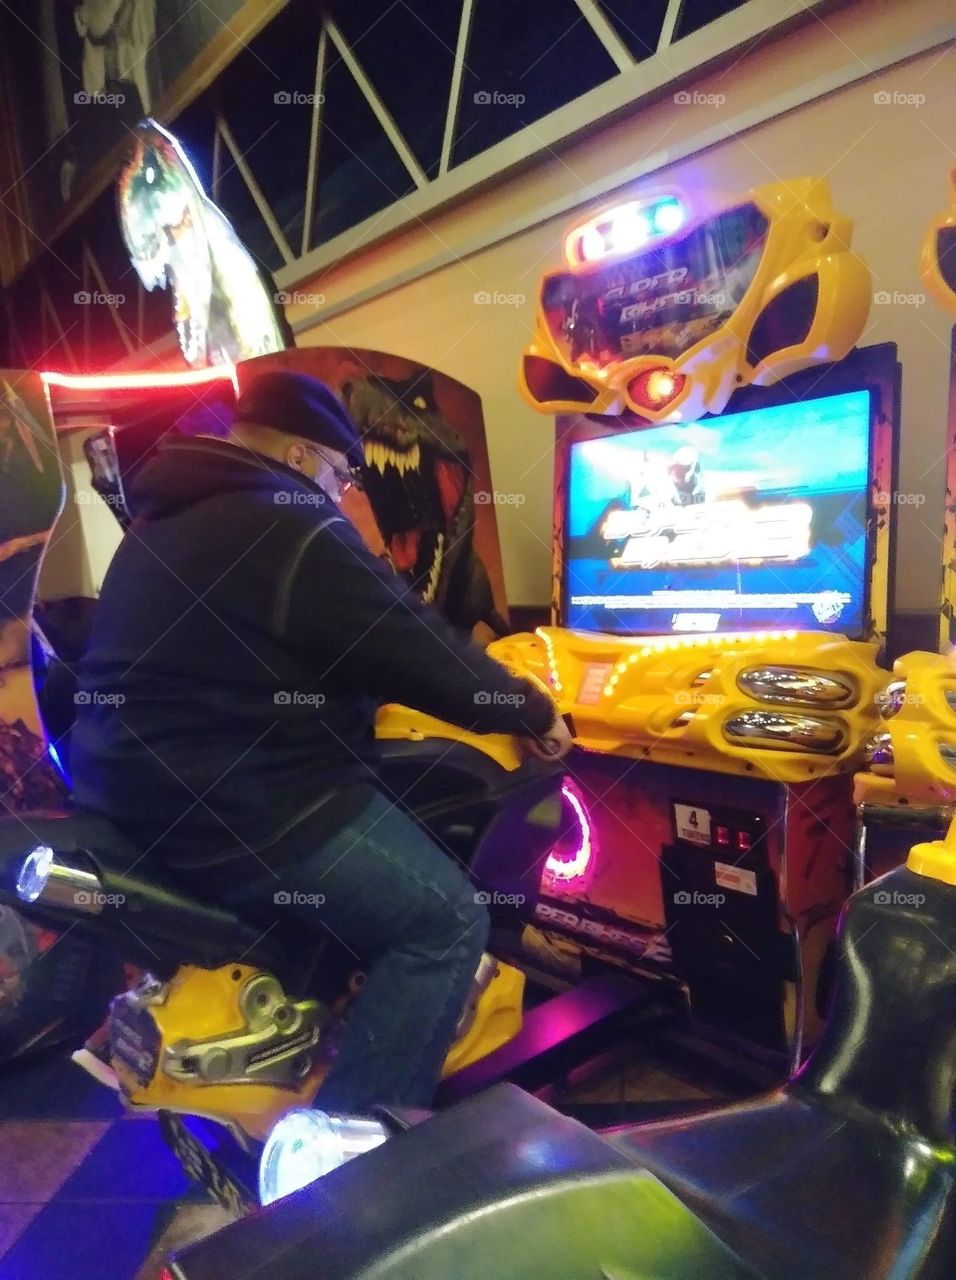 Enjoying a game at the arcade